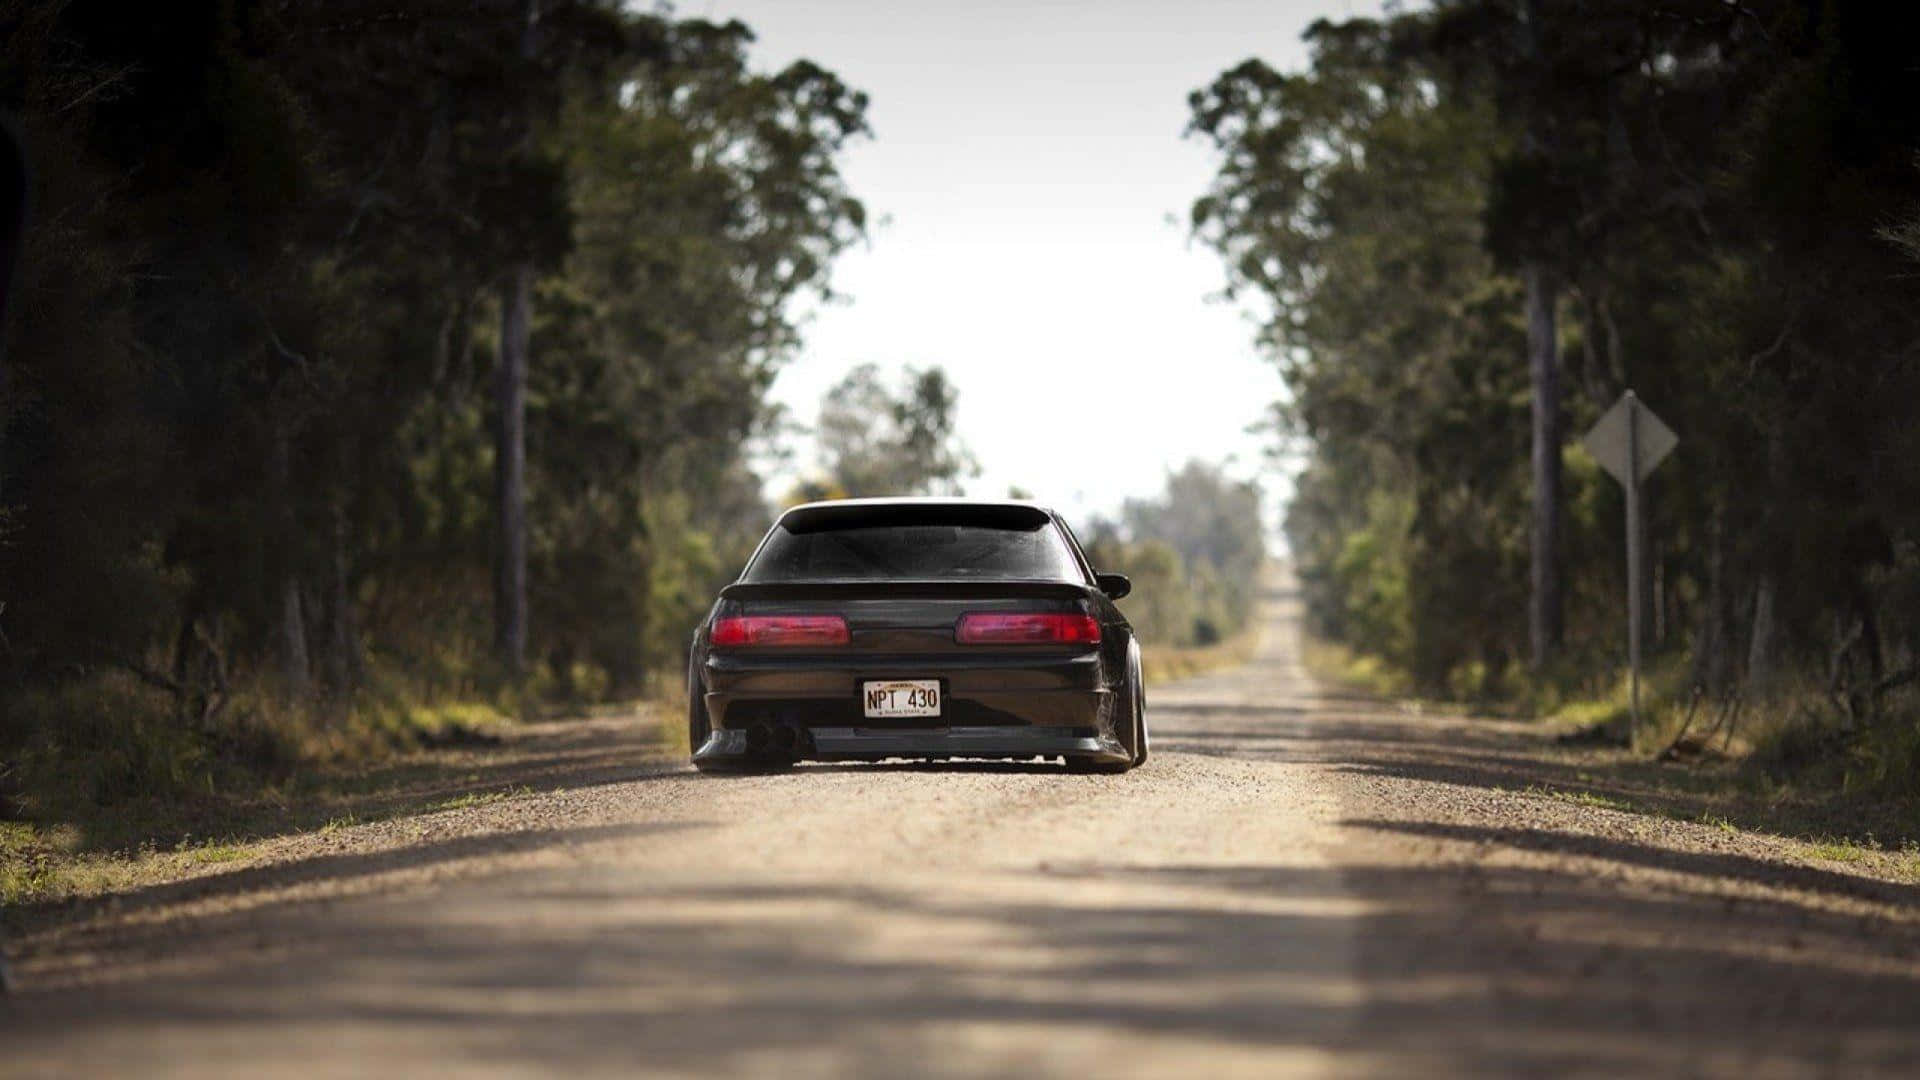 Strahlehell Mit Einem Nissan Silvia S13. Wallpaper